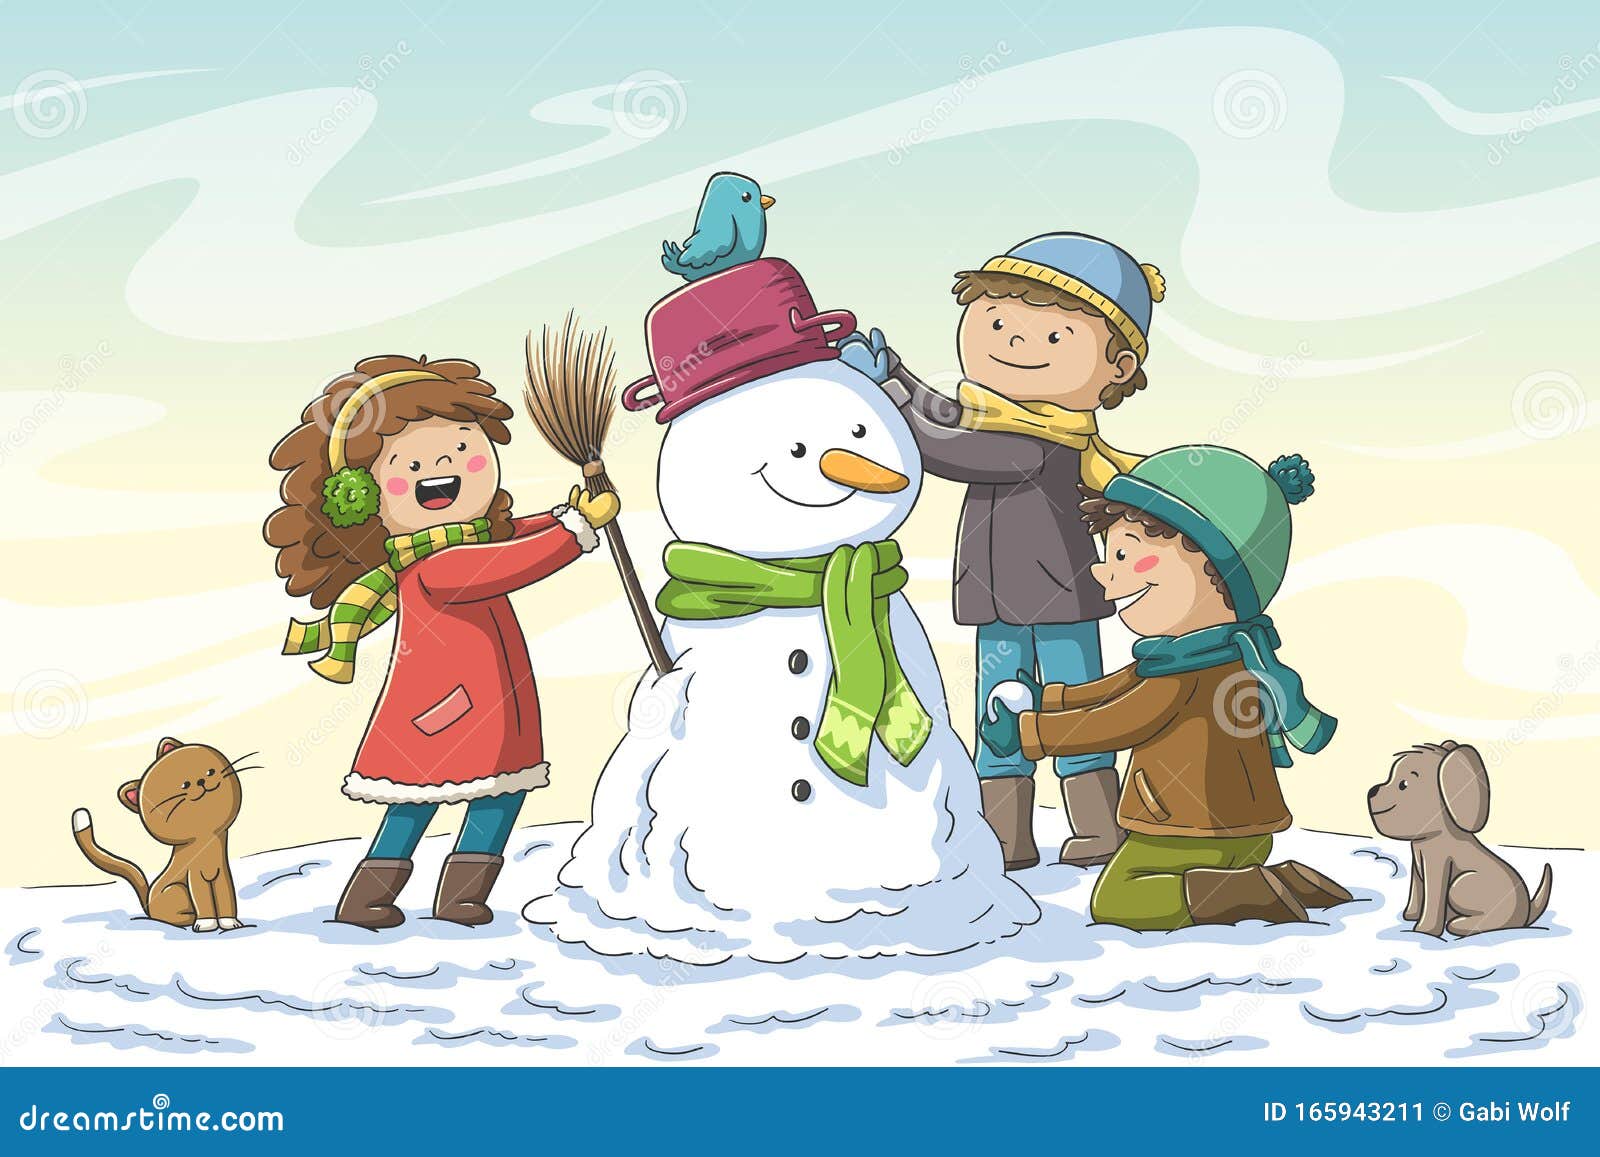 kids build a snowman